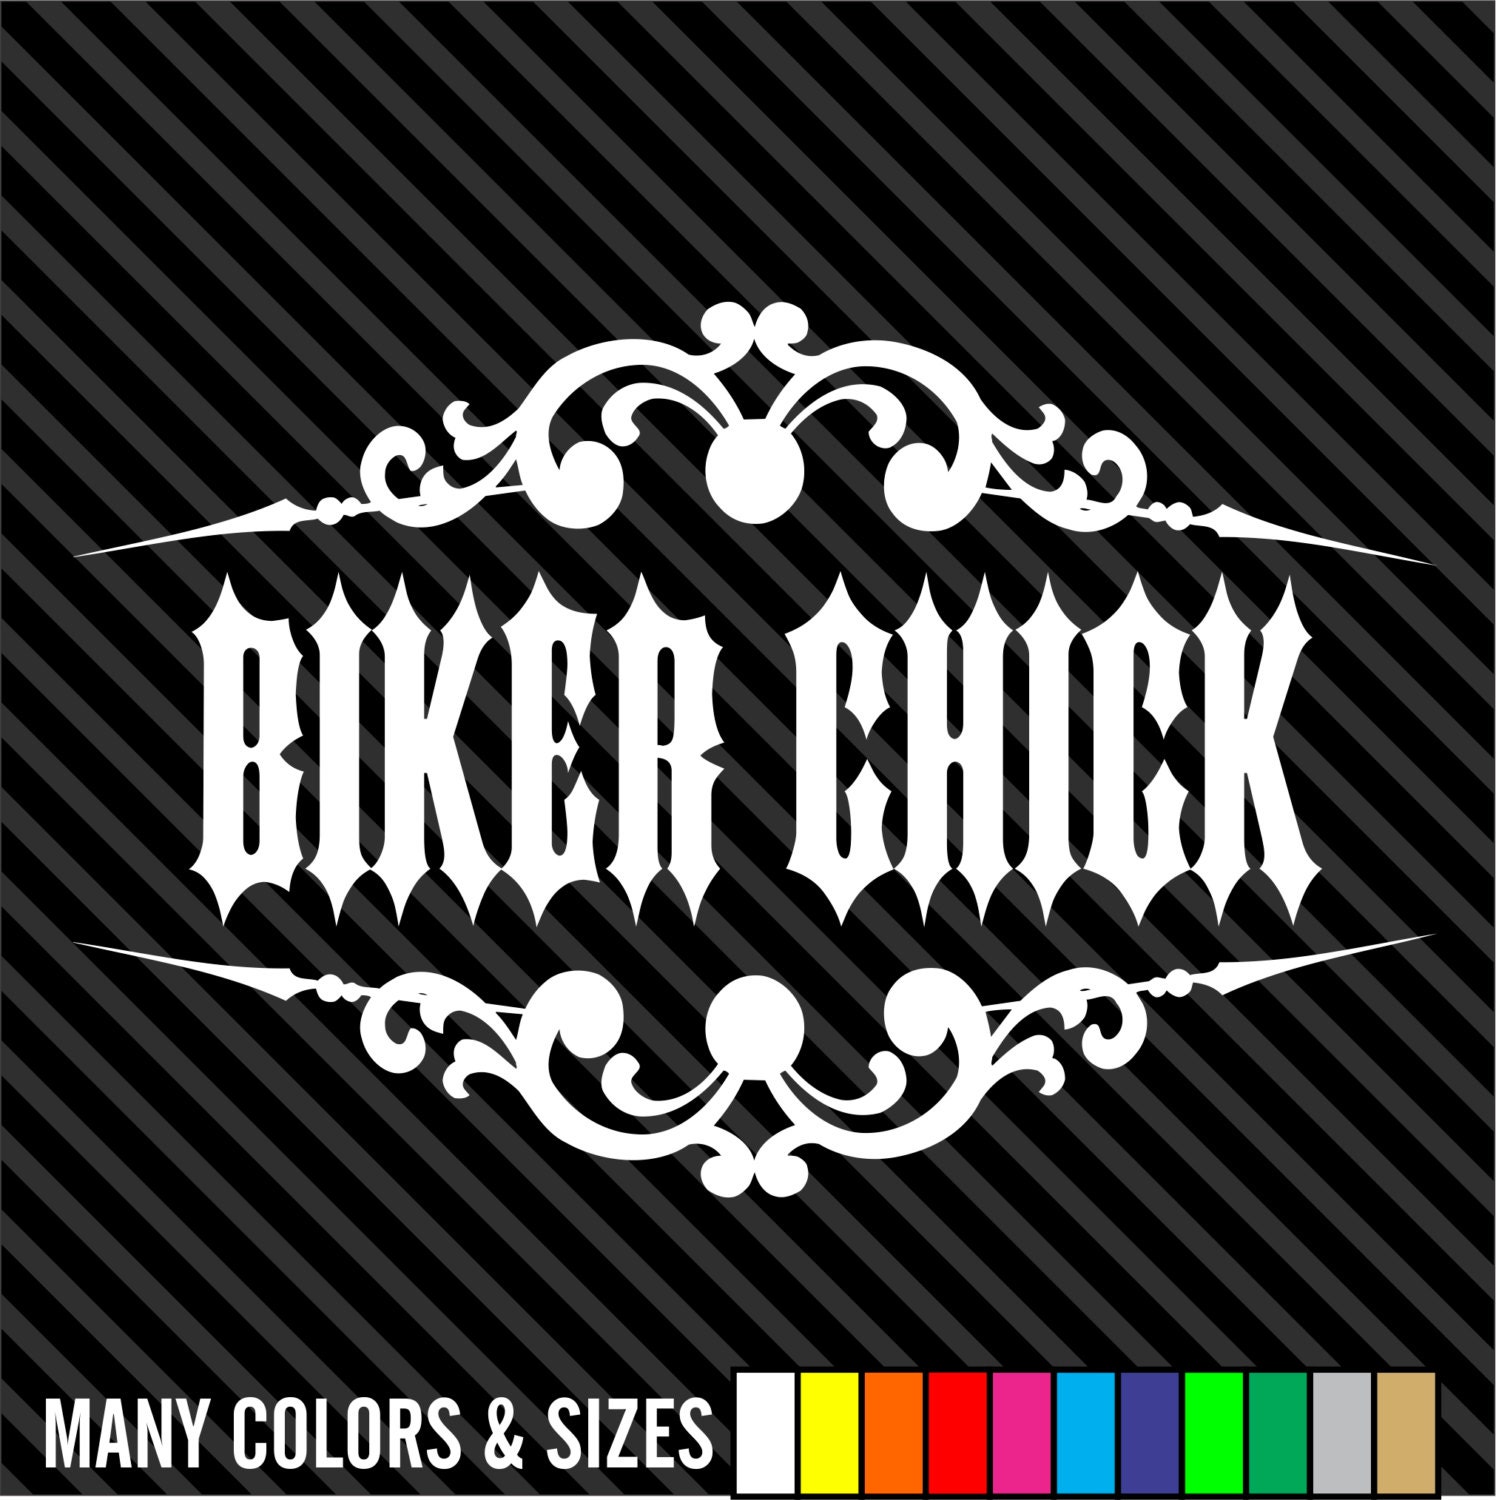 Biker Chick Decal Motorcycle Car Truck Window Laptop Vinyl 